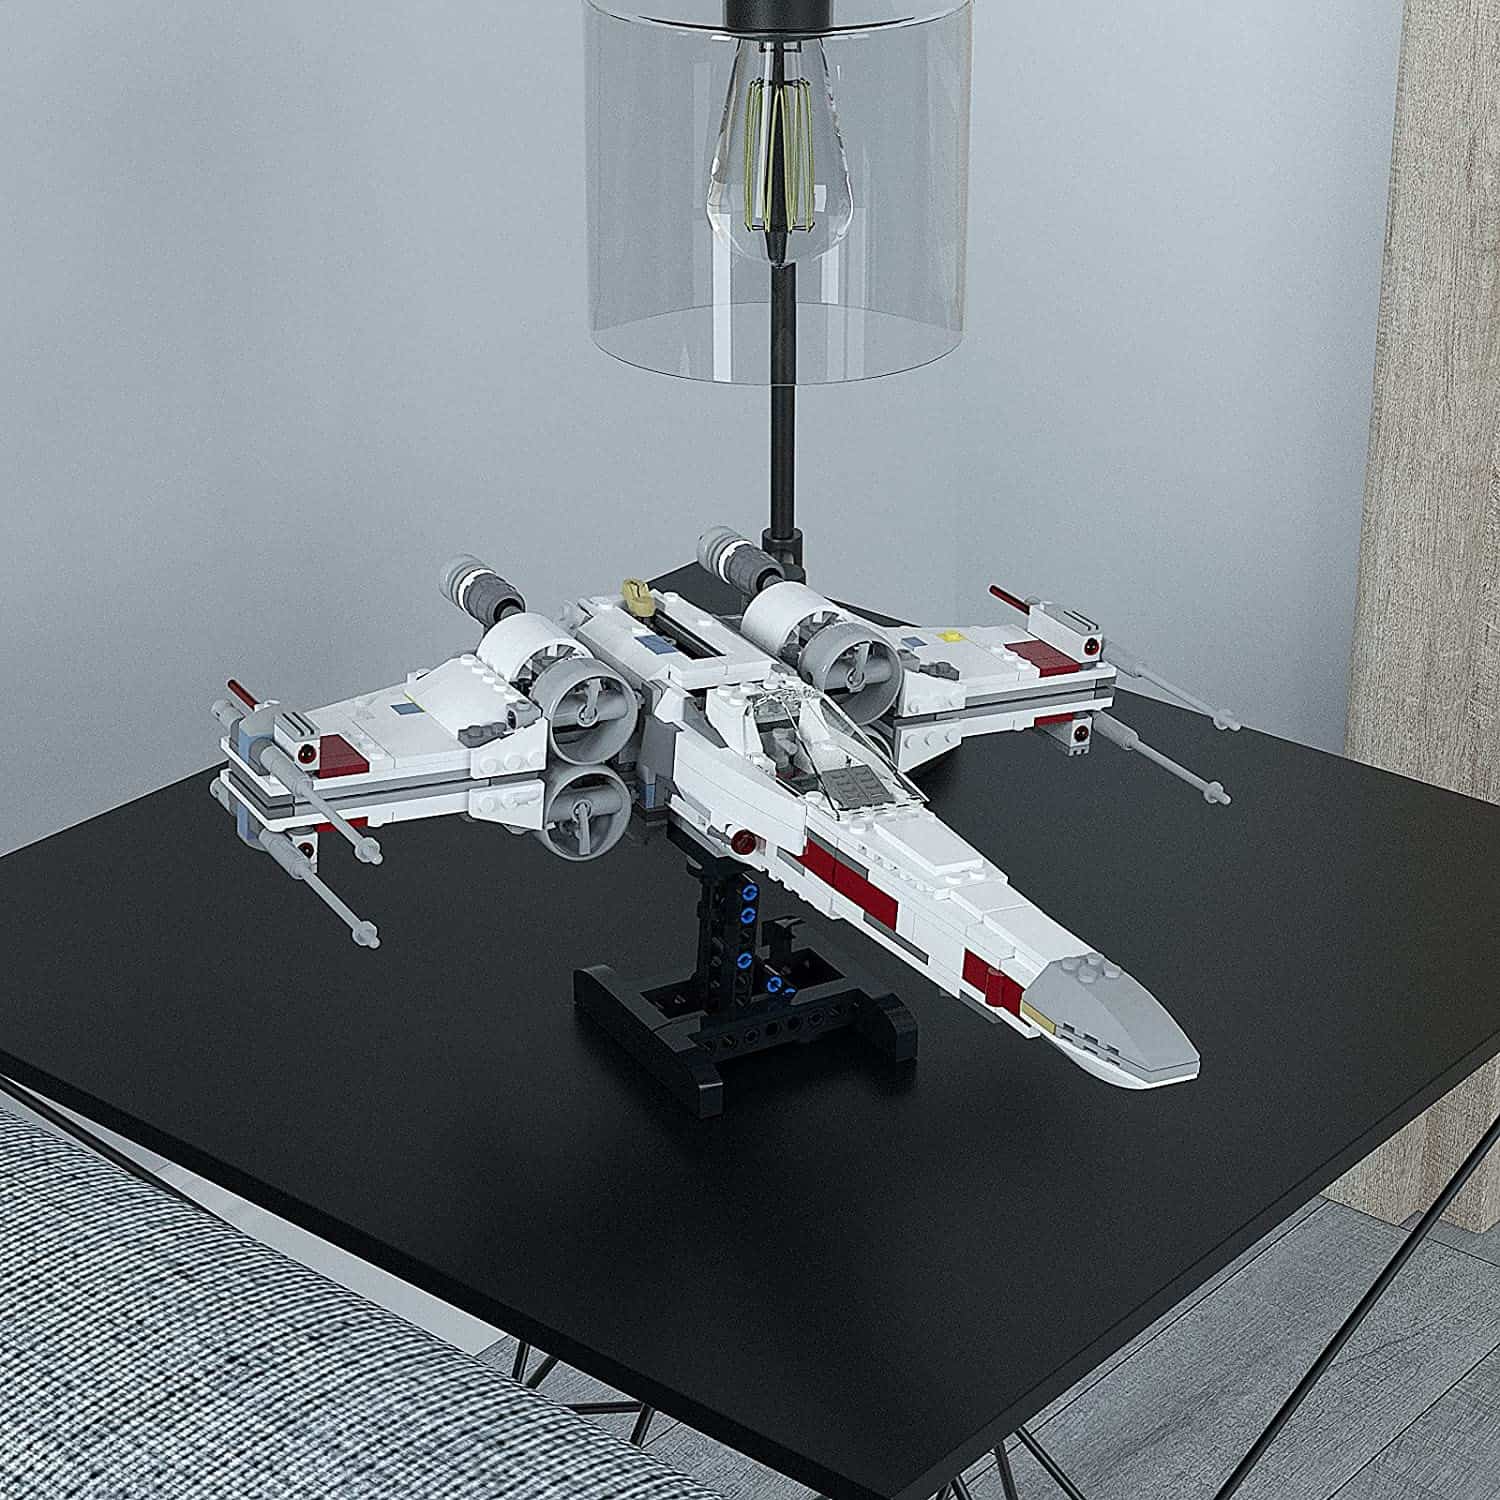 Lego Star Wars ship stand